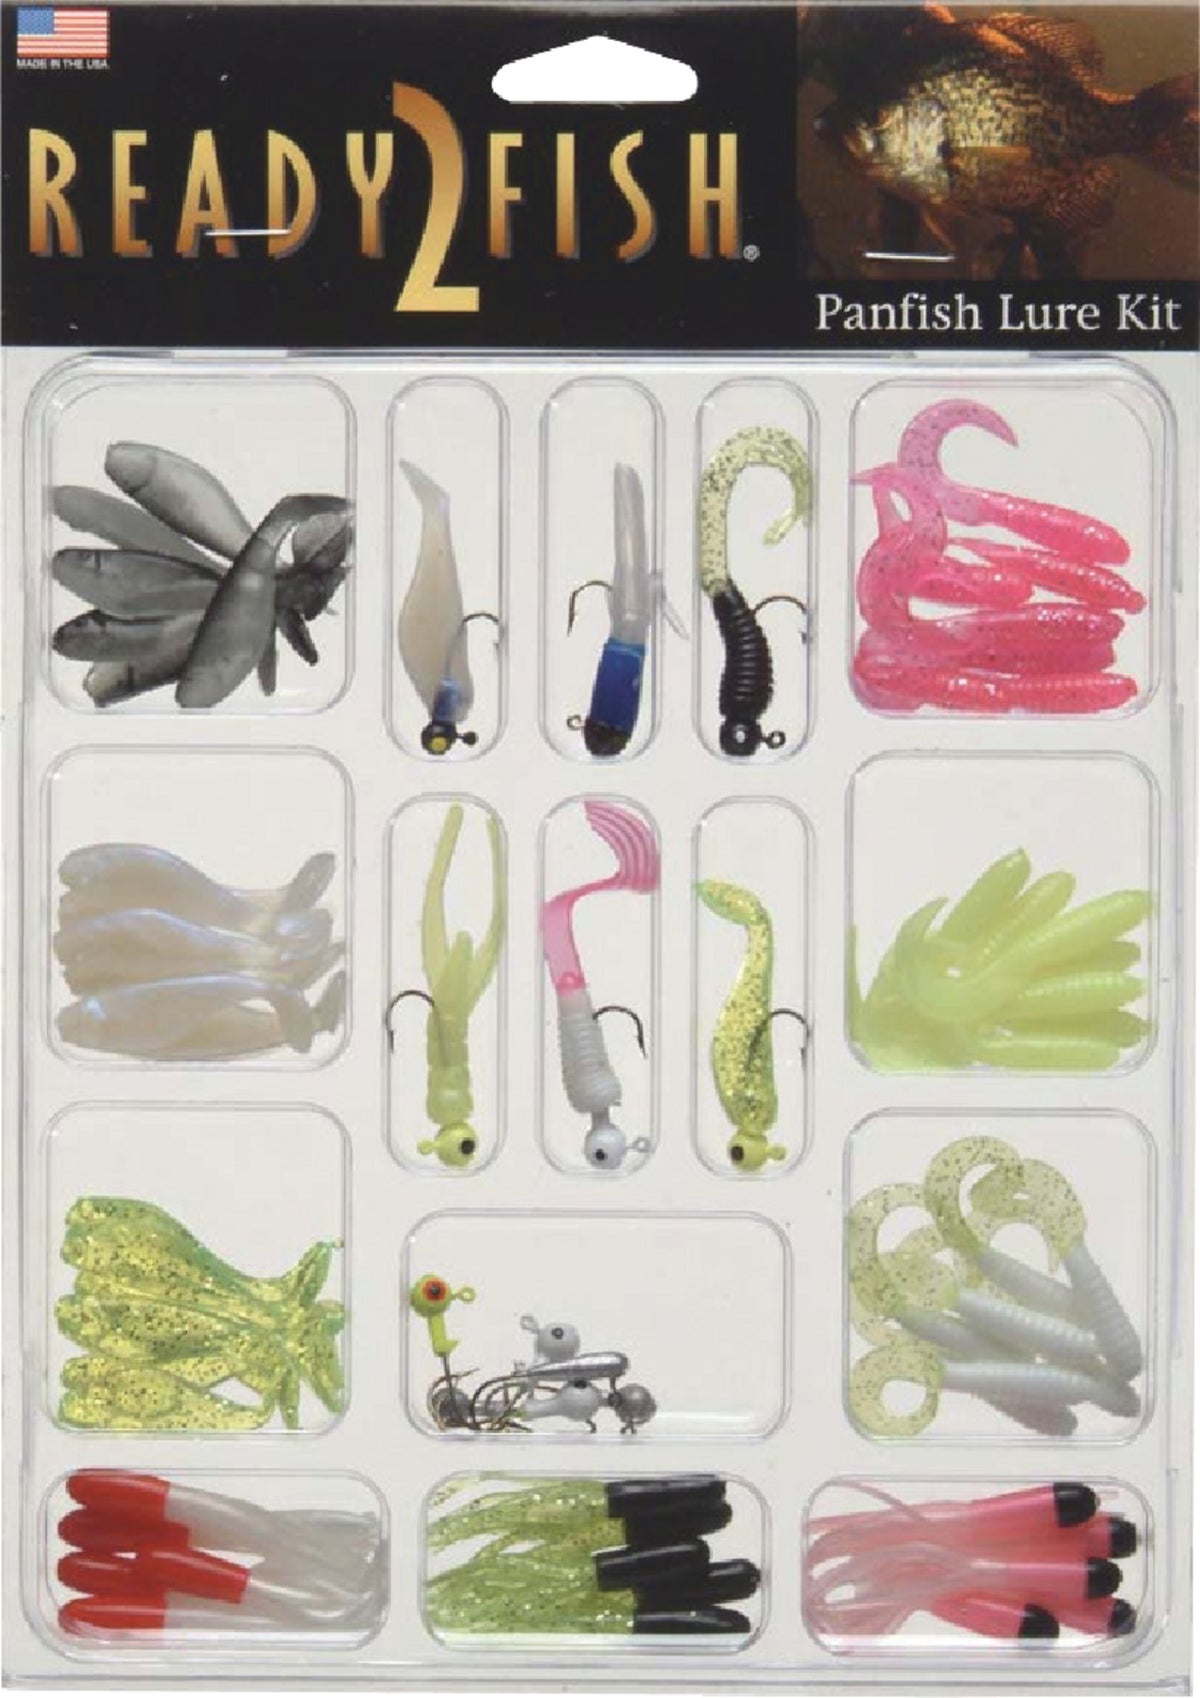 Buy SouthBend Ready 2 Fish Panfish Lure Kit